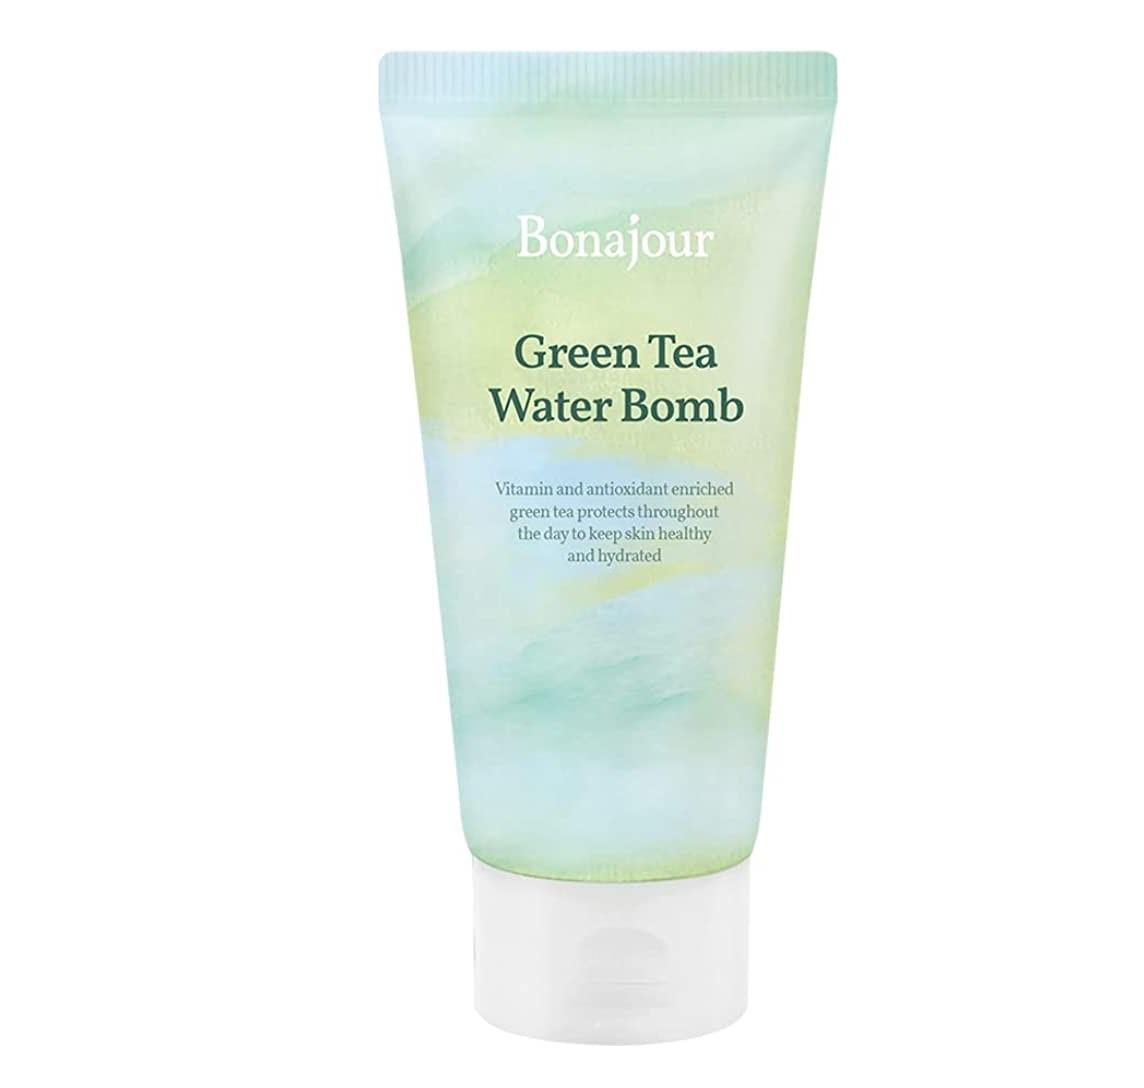 Green Tea Water Bomb